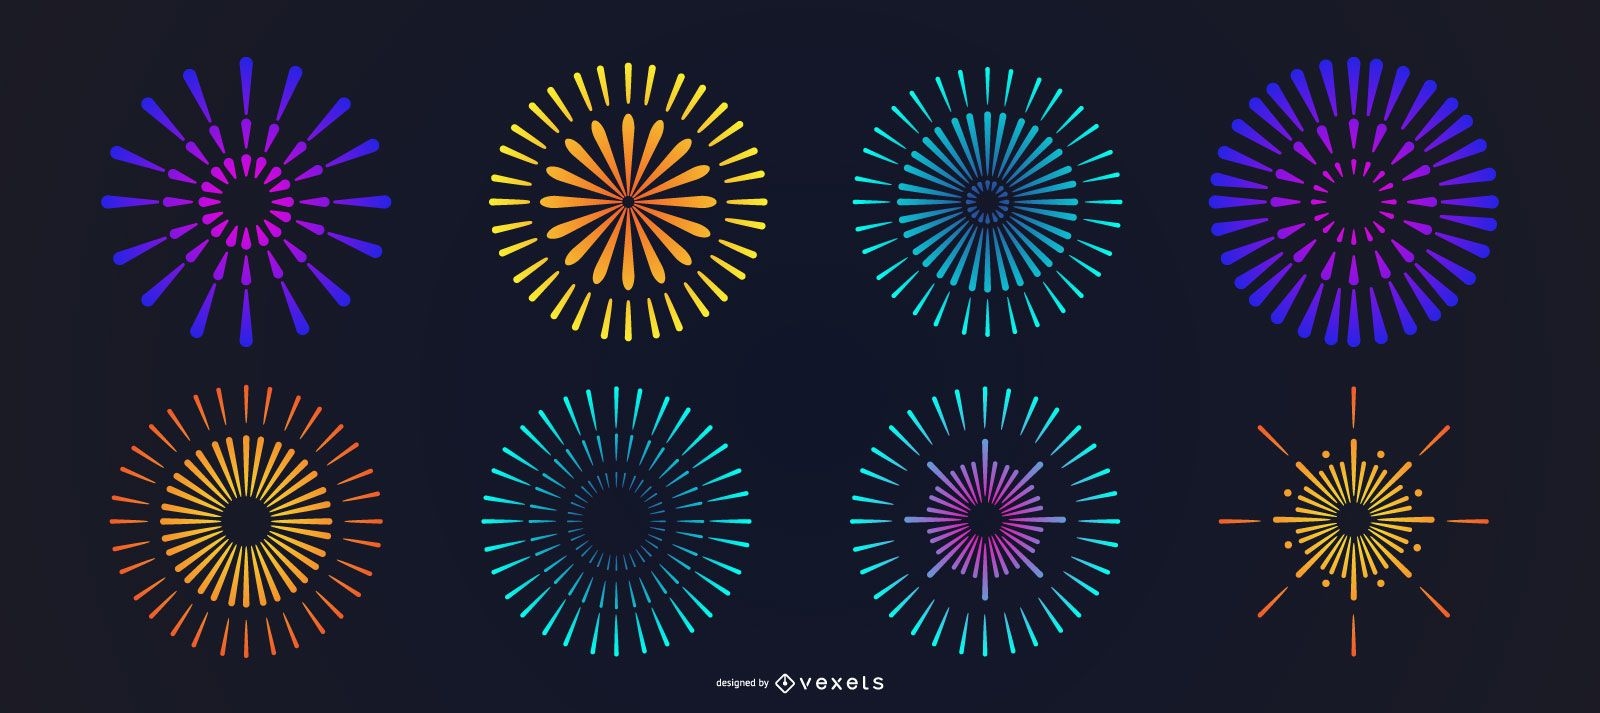 Bright colorful fireworks set